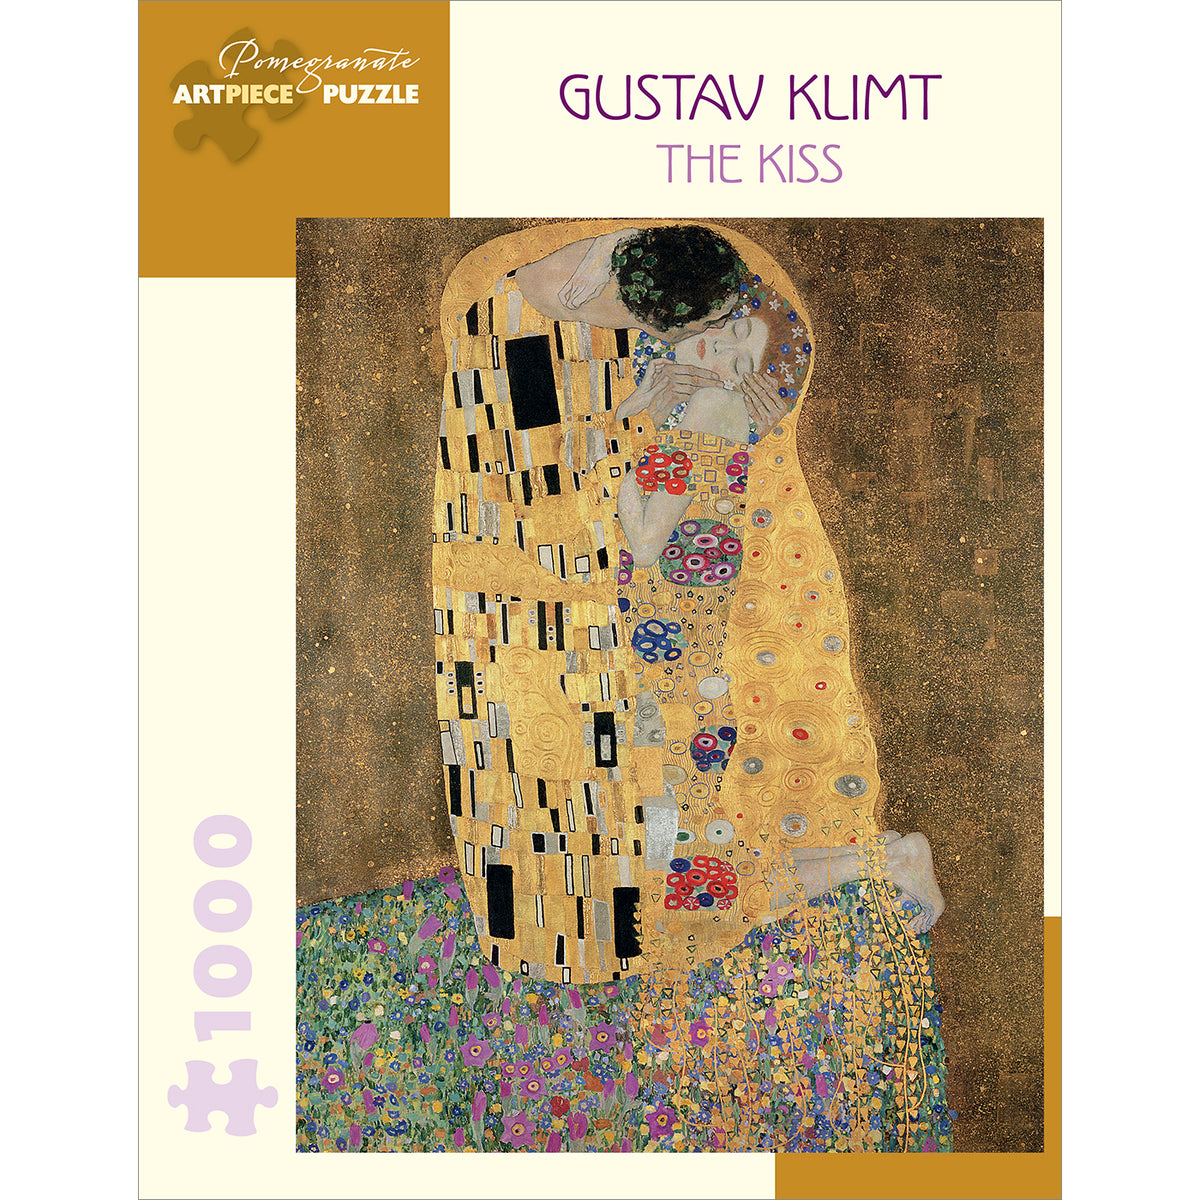 Gustav Klimt's The Kiss Puzzle - 1,000 Pieces - Getty Museum Store